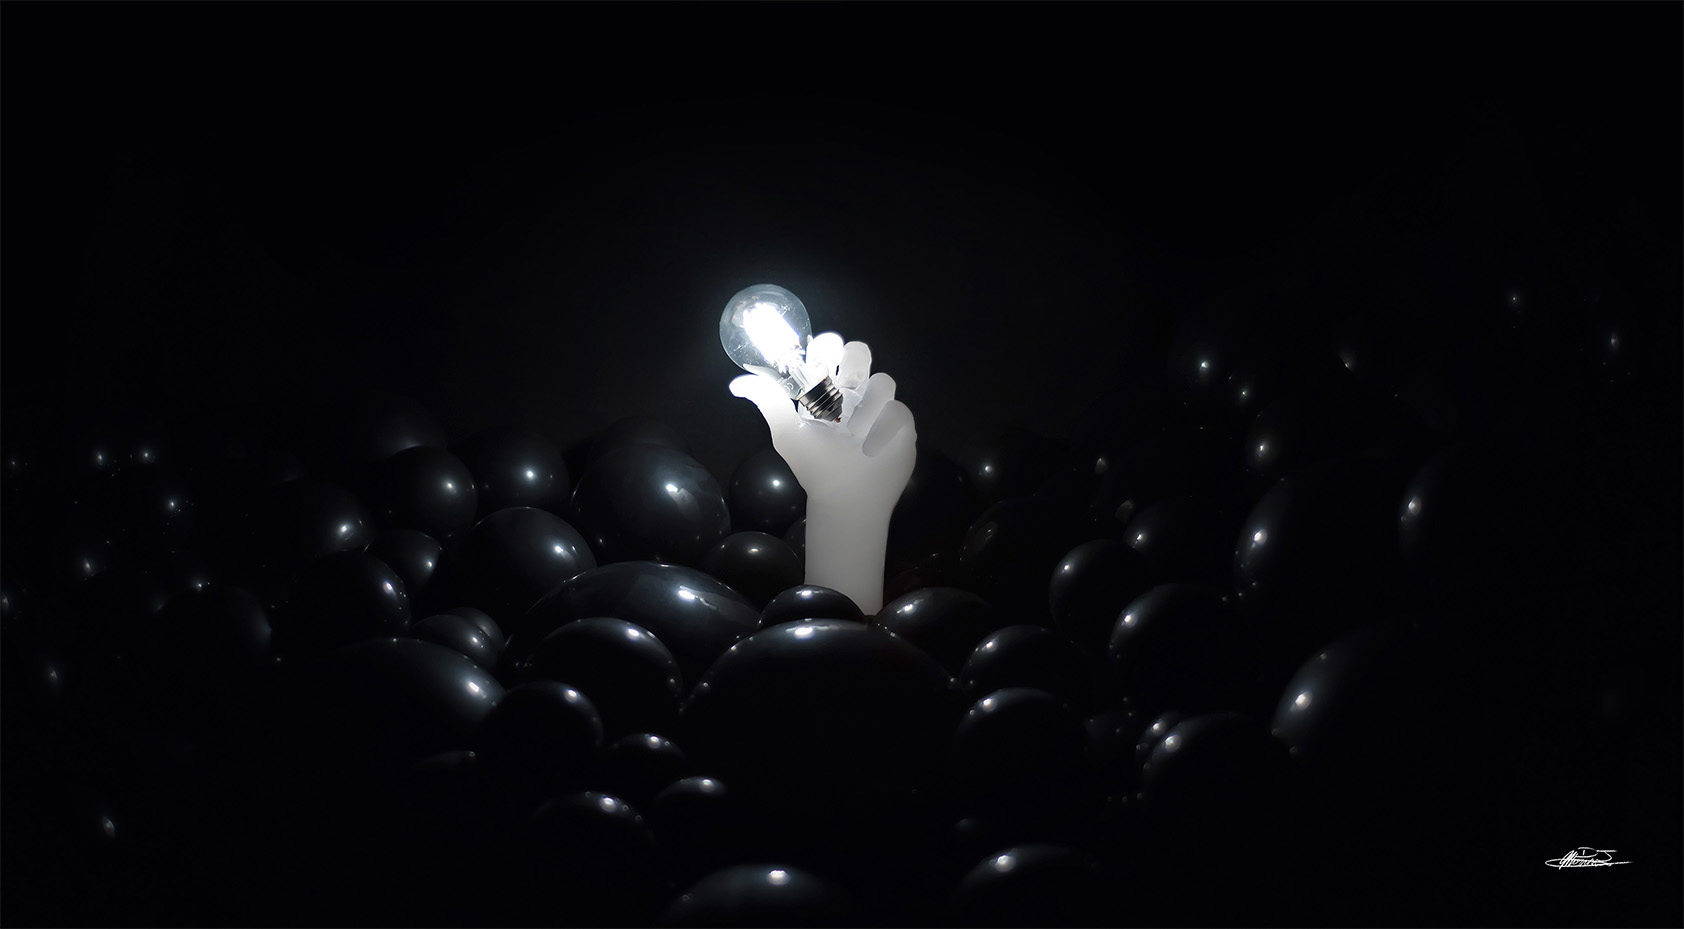 Reaching baloon sculpture wax hand reaching through sea of black balloon holding lit light bulb